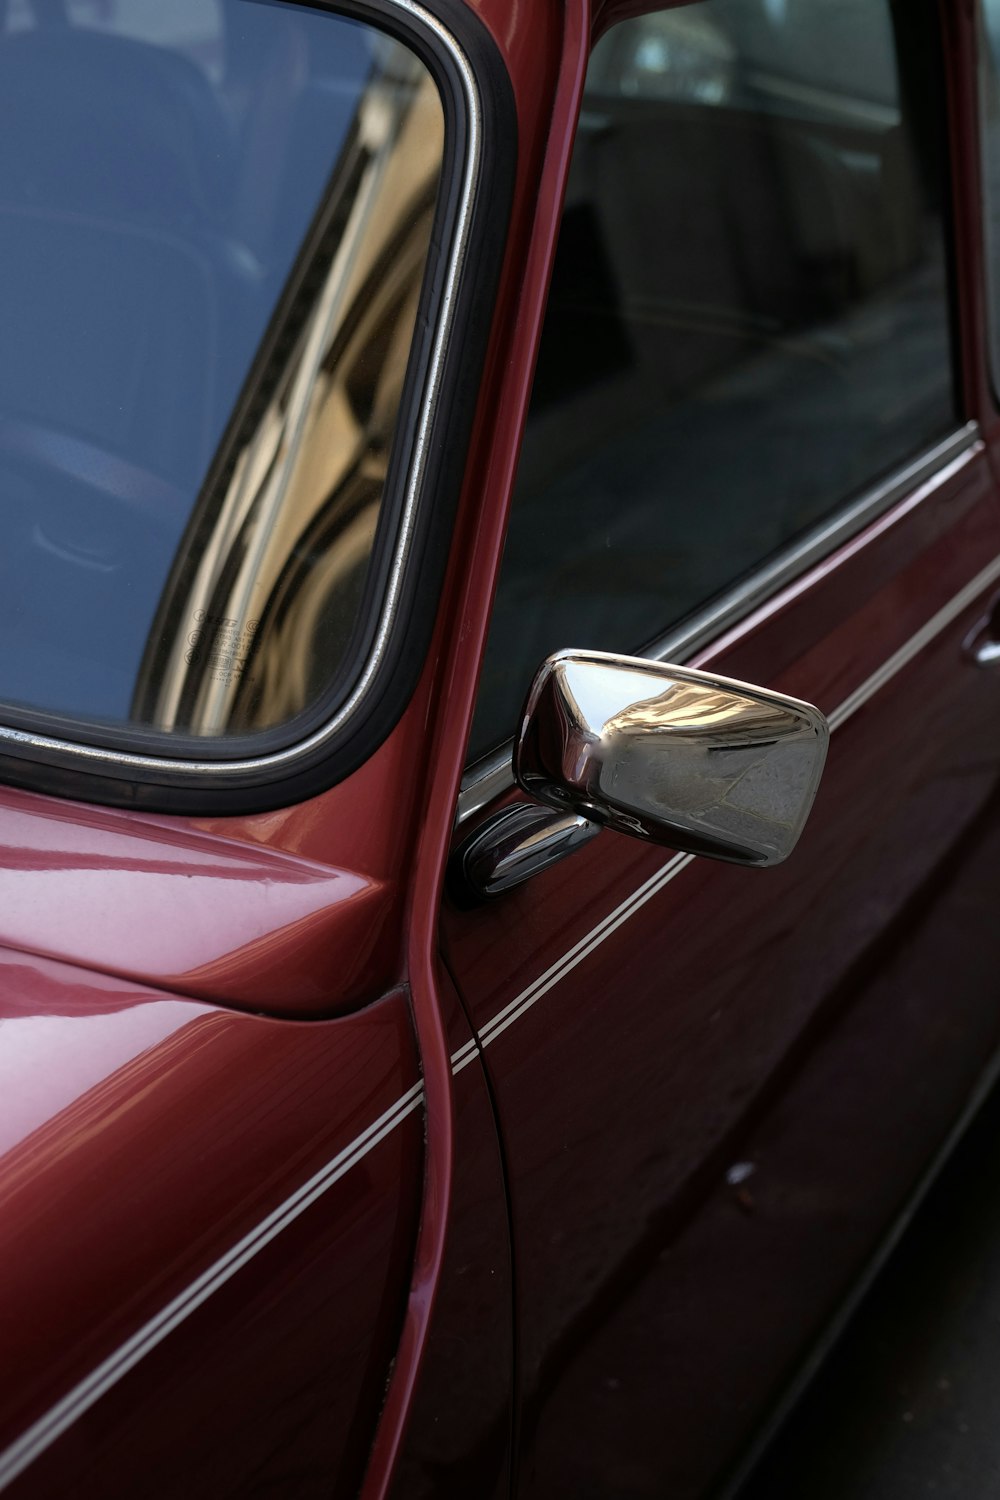 a close up of a car door with a mirror